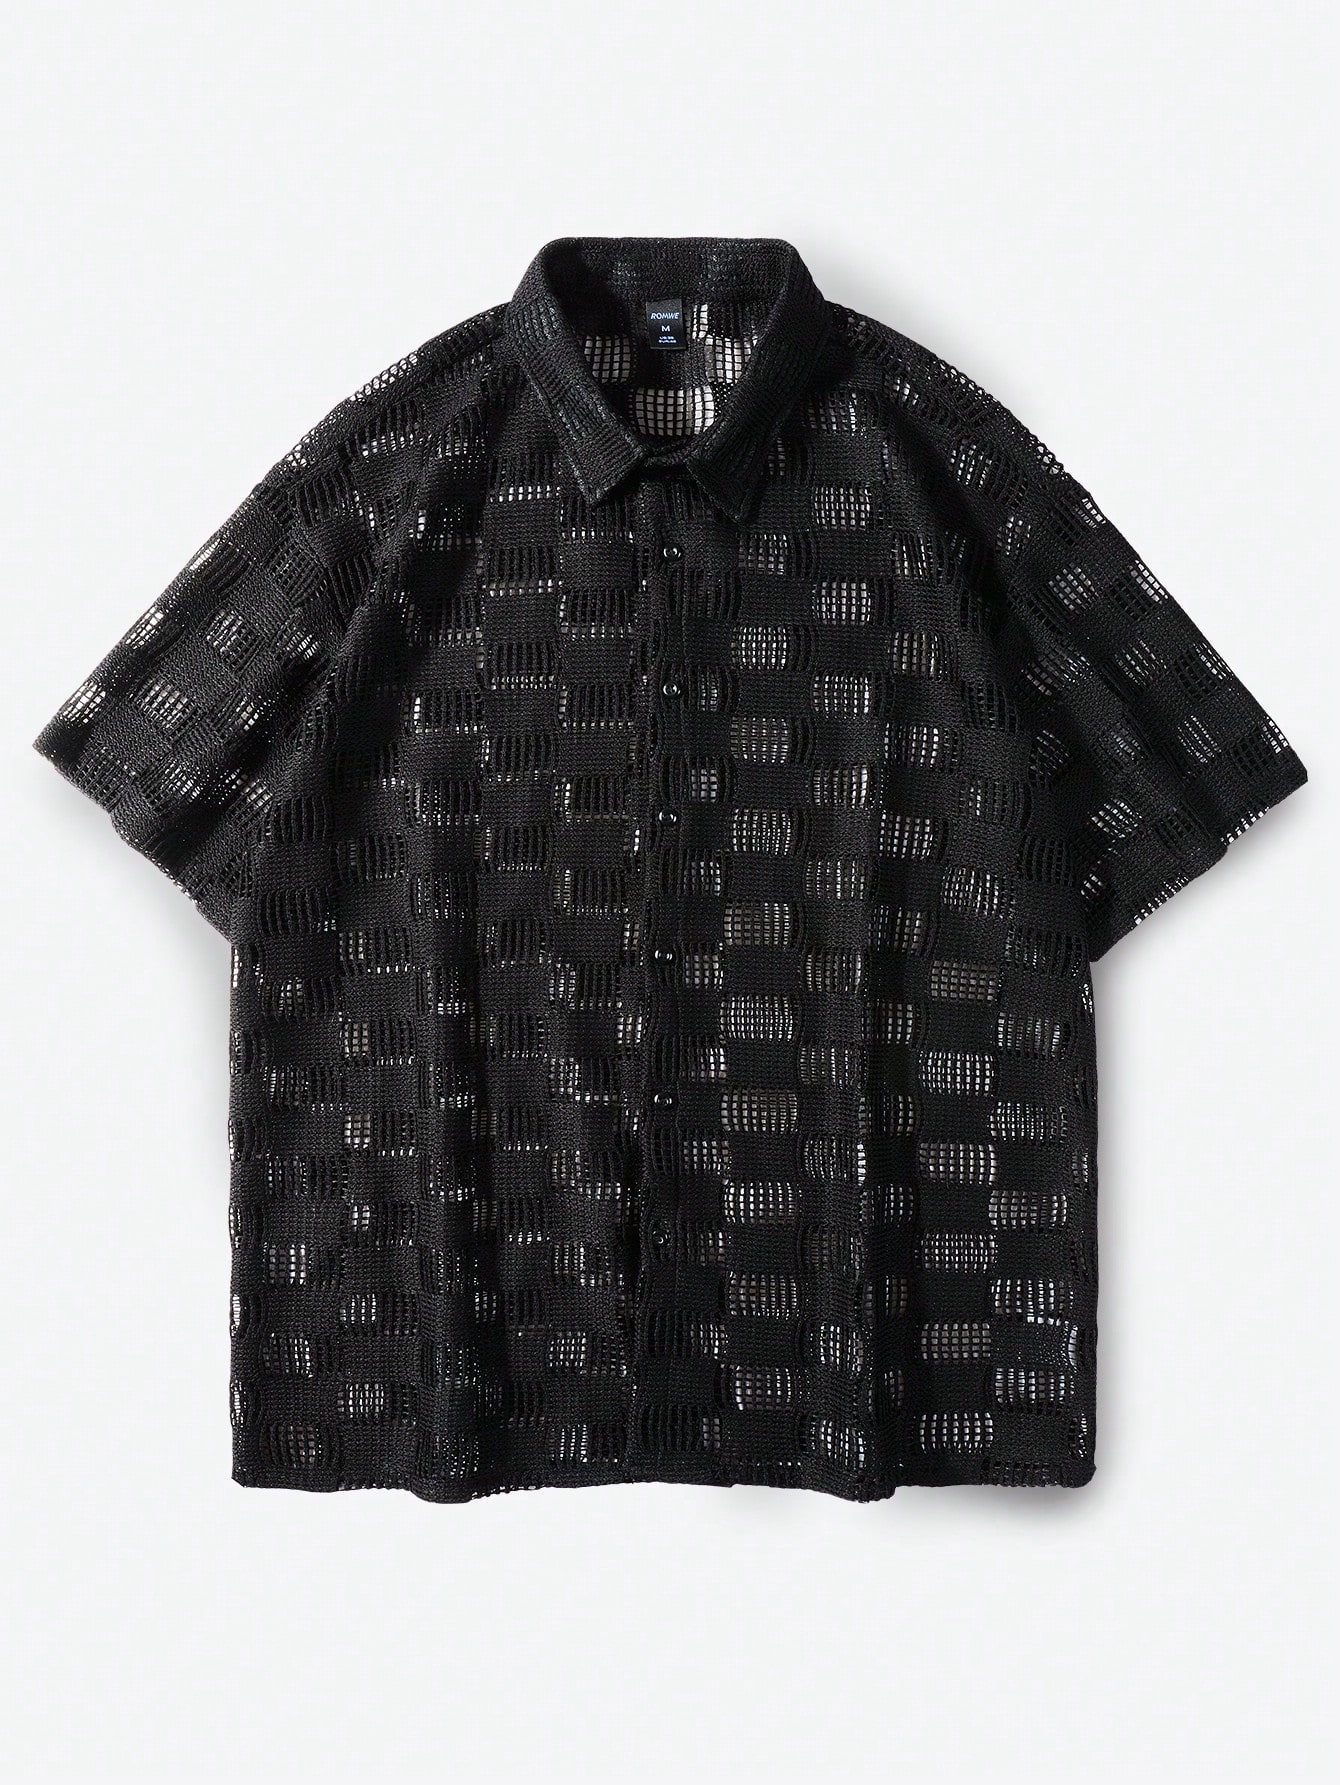 ROMWE Street Life Мужская летняя сетчатая вязаная винтажная пляжная рубашка с короткими рукавами, черный